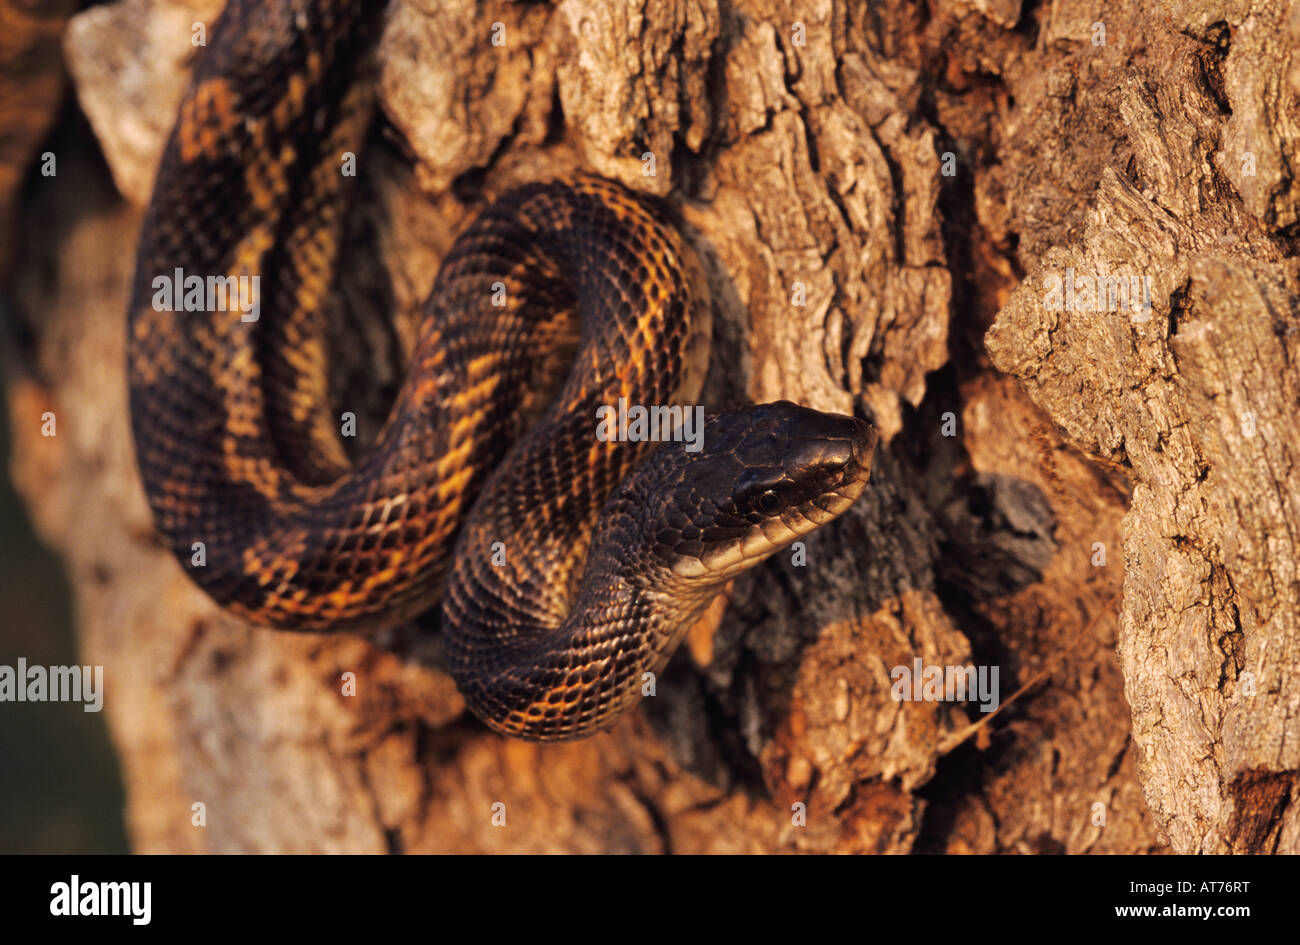 Texas Rat Snake Elaphe obsoleta lindheimeri adult Lake Corpus Christi Texas USA May 2003 Stock Photo